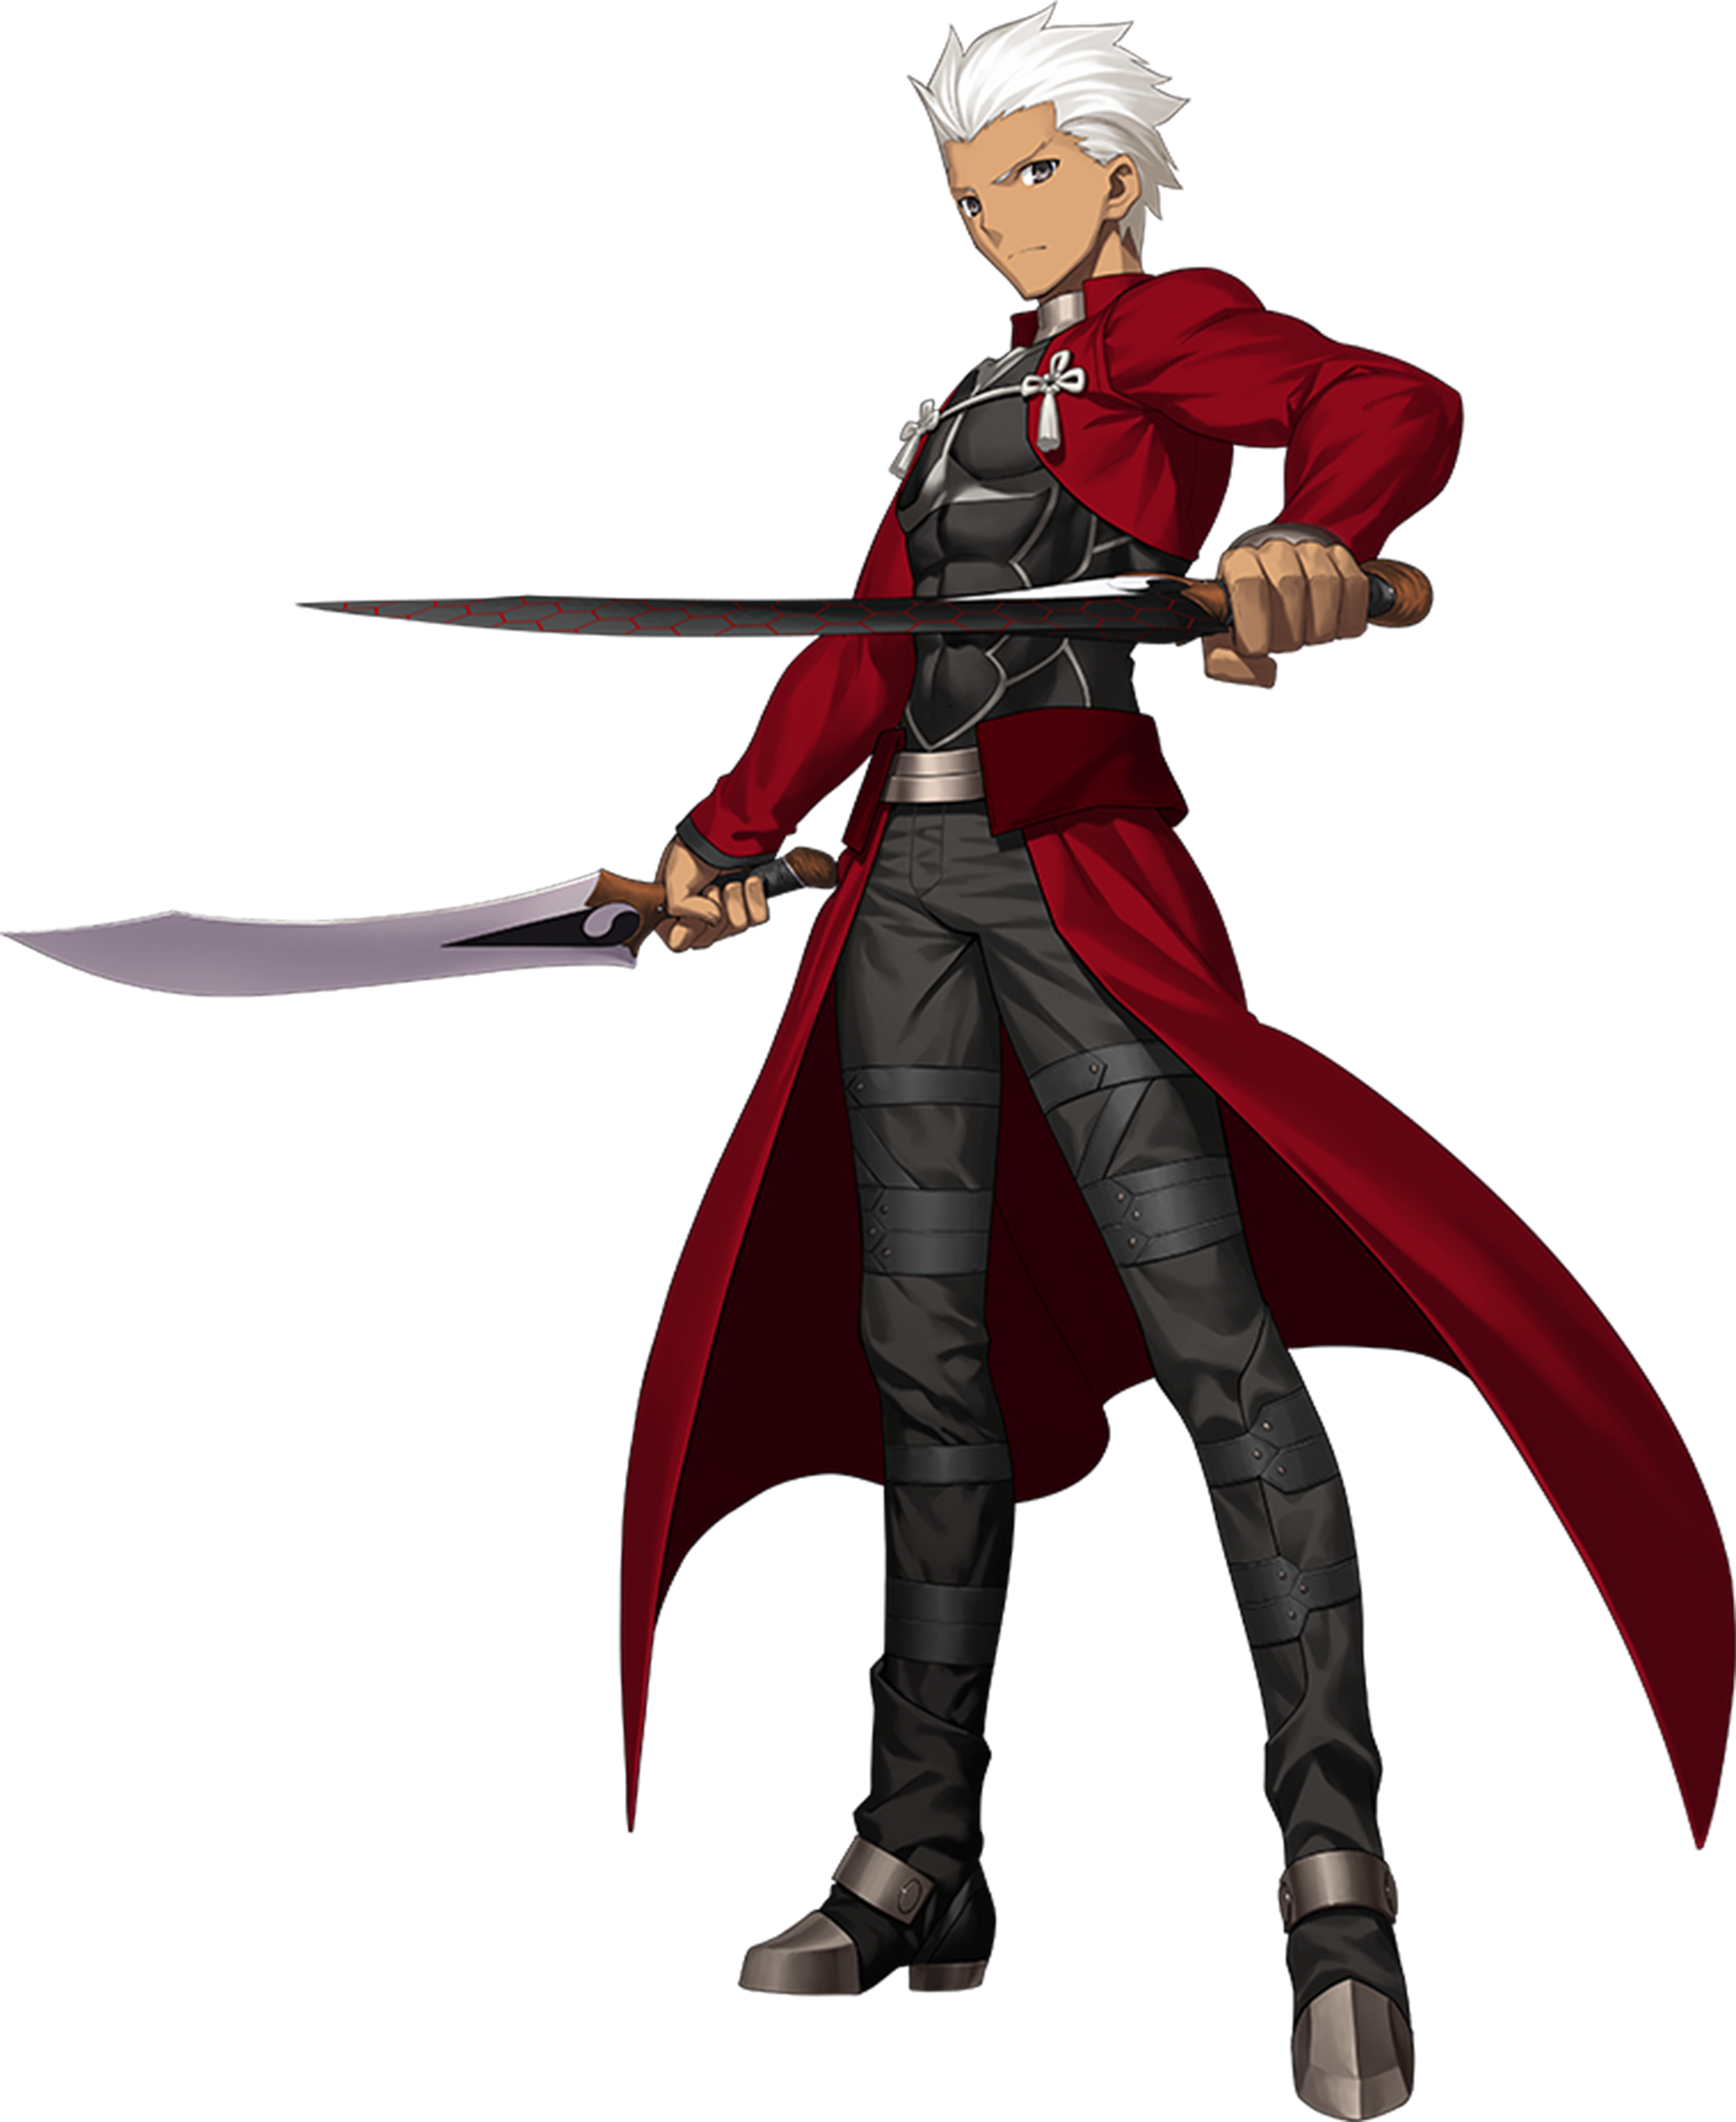 Archer (Fate/stay night) | VS Battles Wiki | FANDOM powered by Wikia